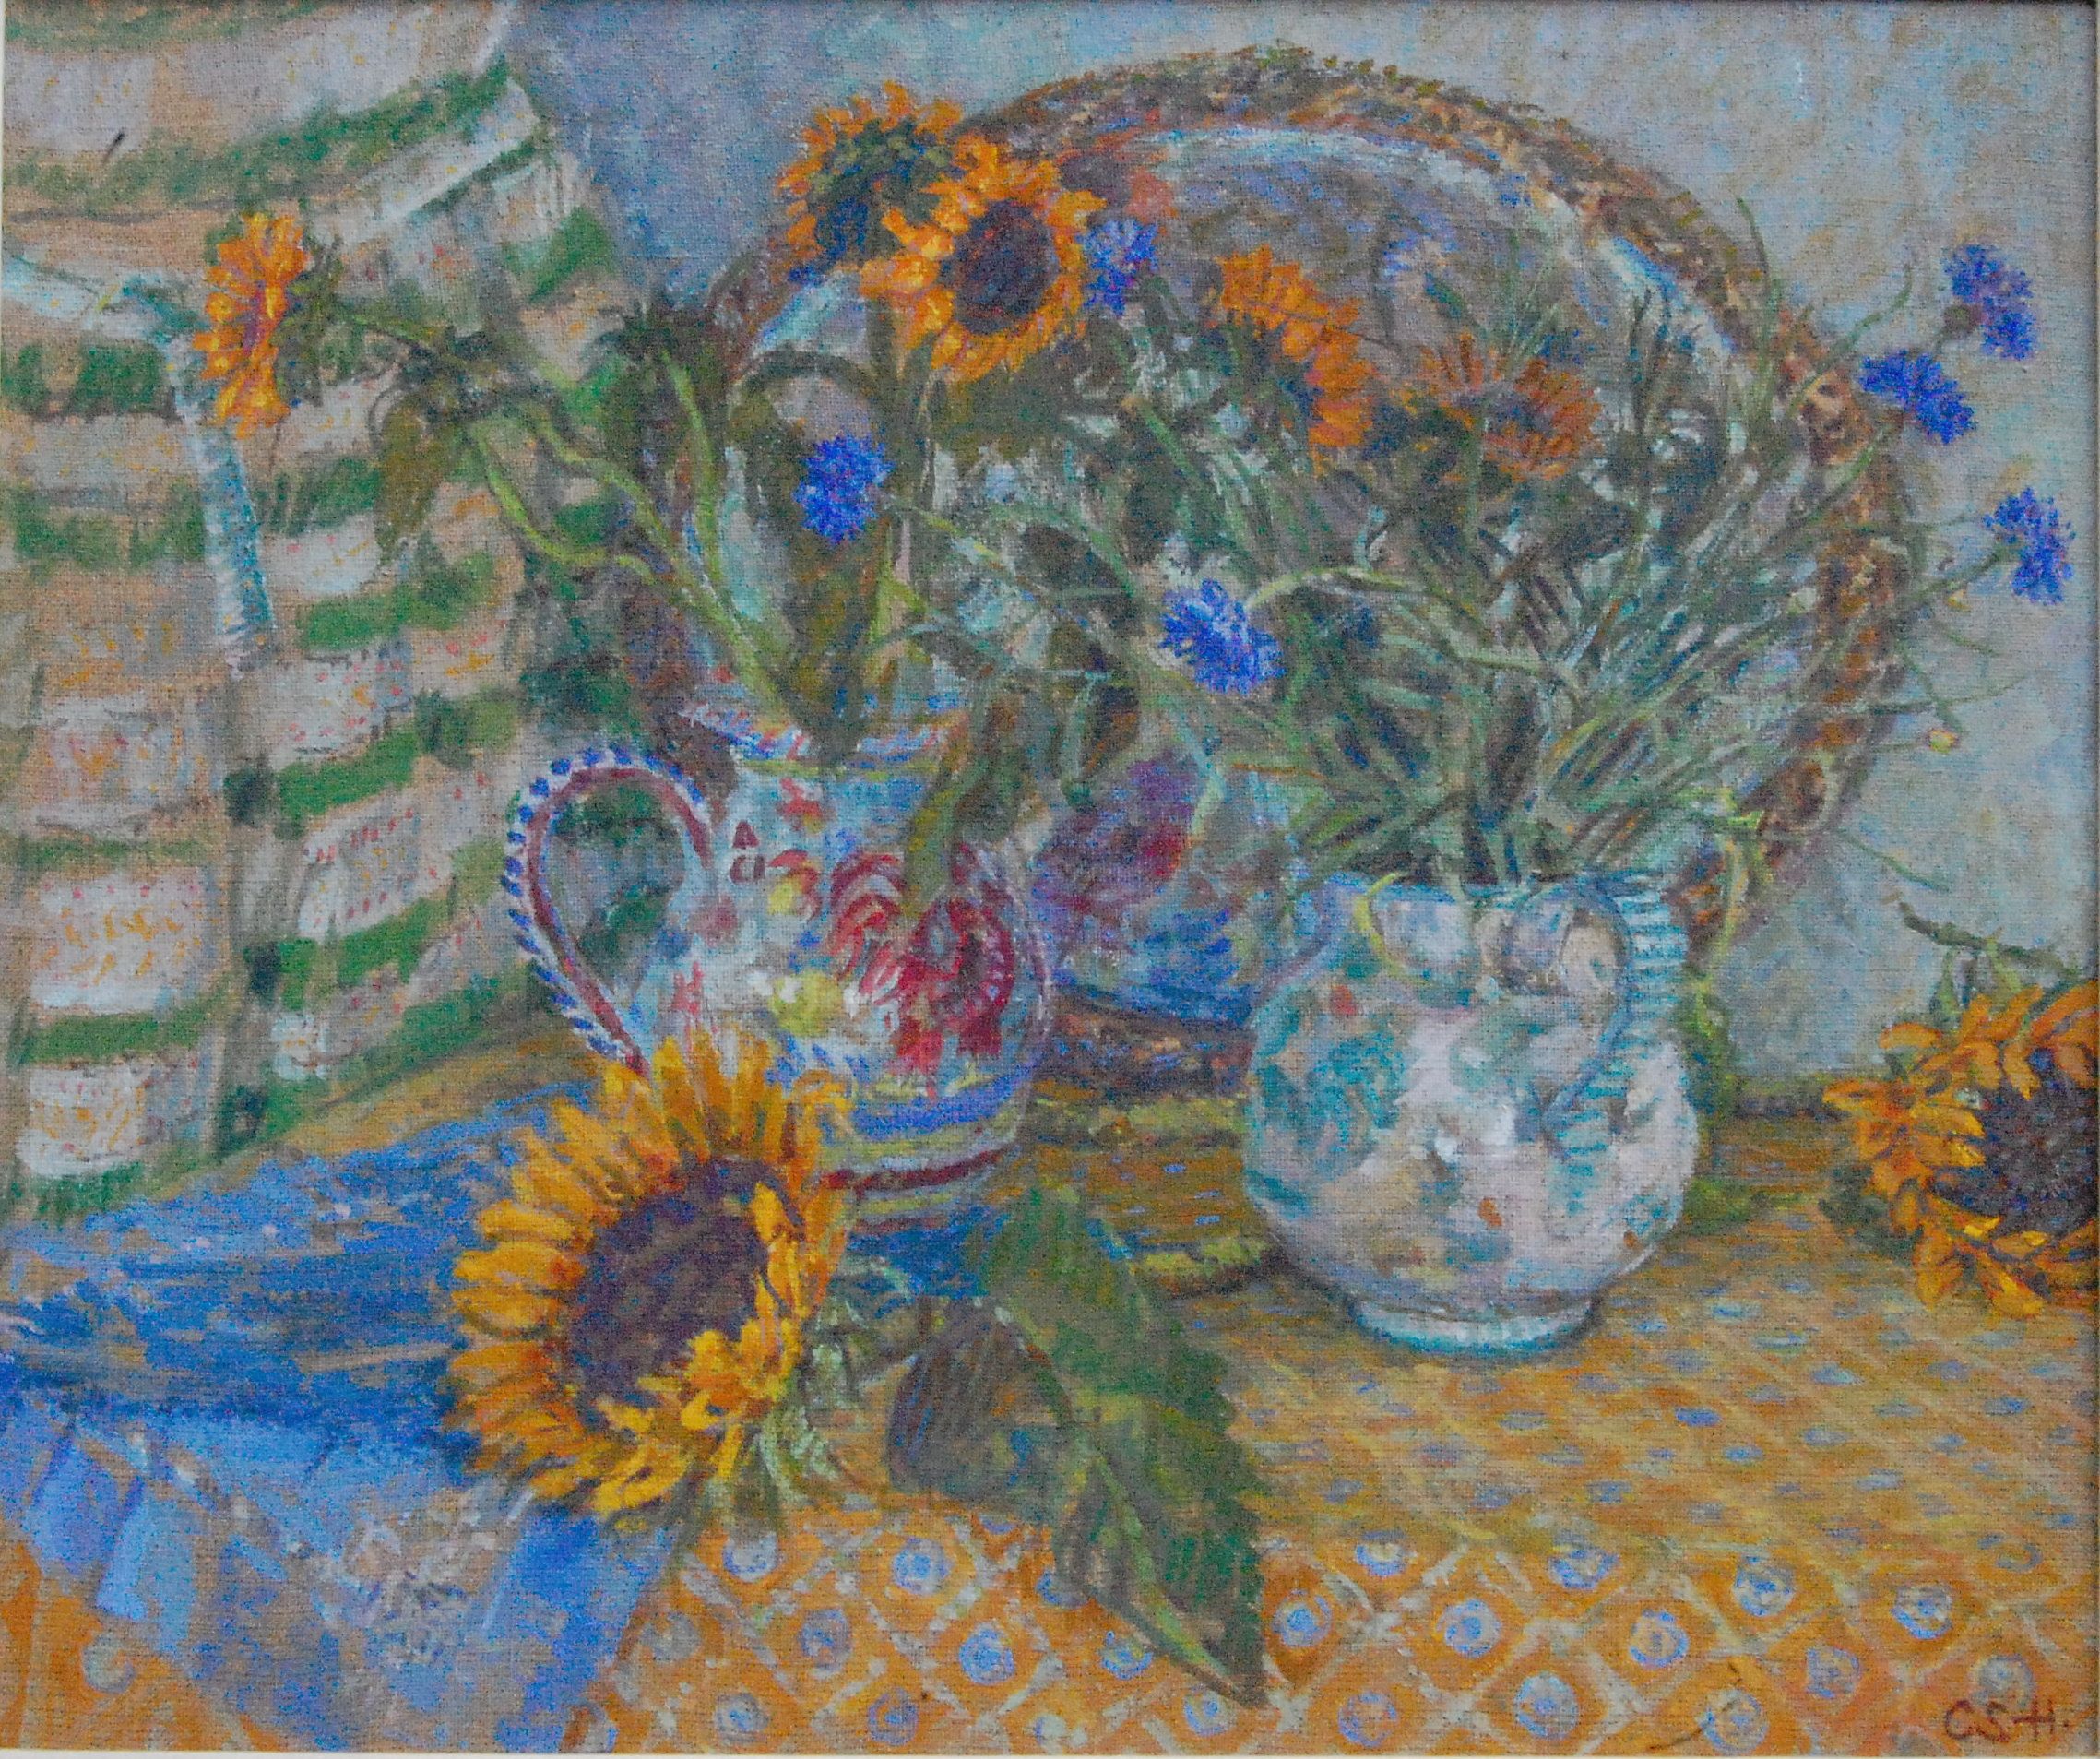 Sunflowers and Italian Jugs by Clova Stuart-Hamilton